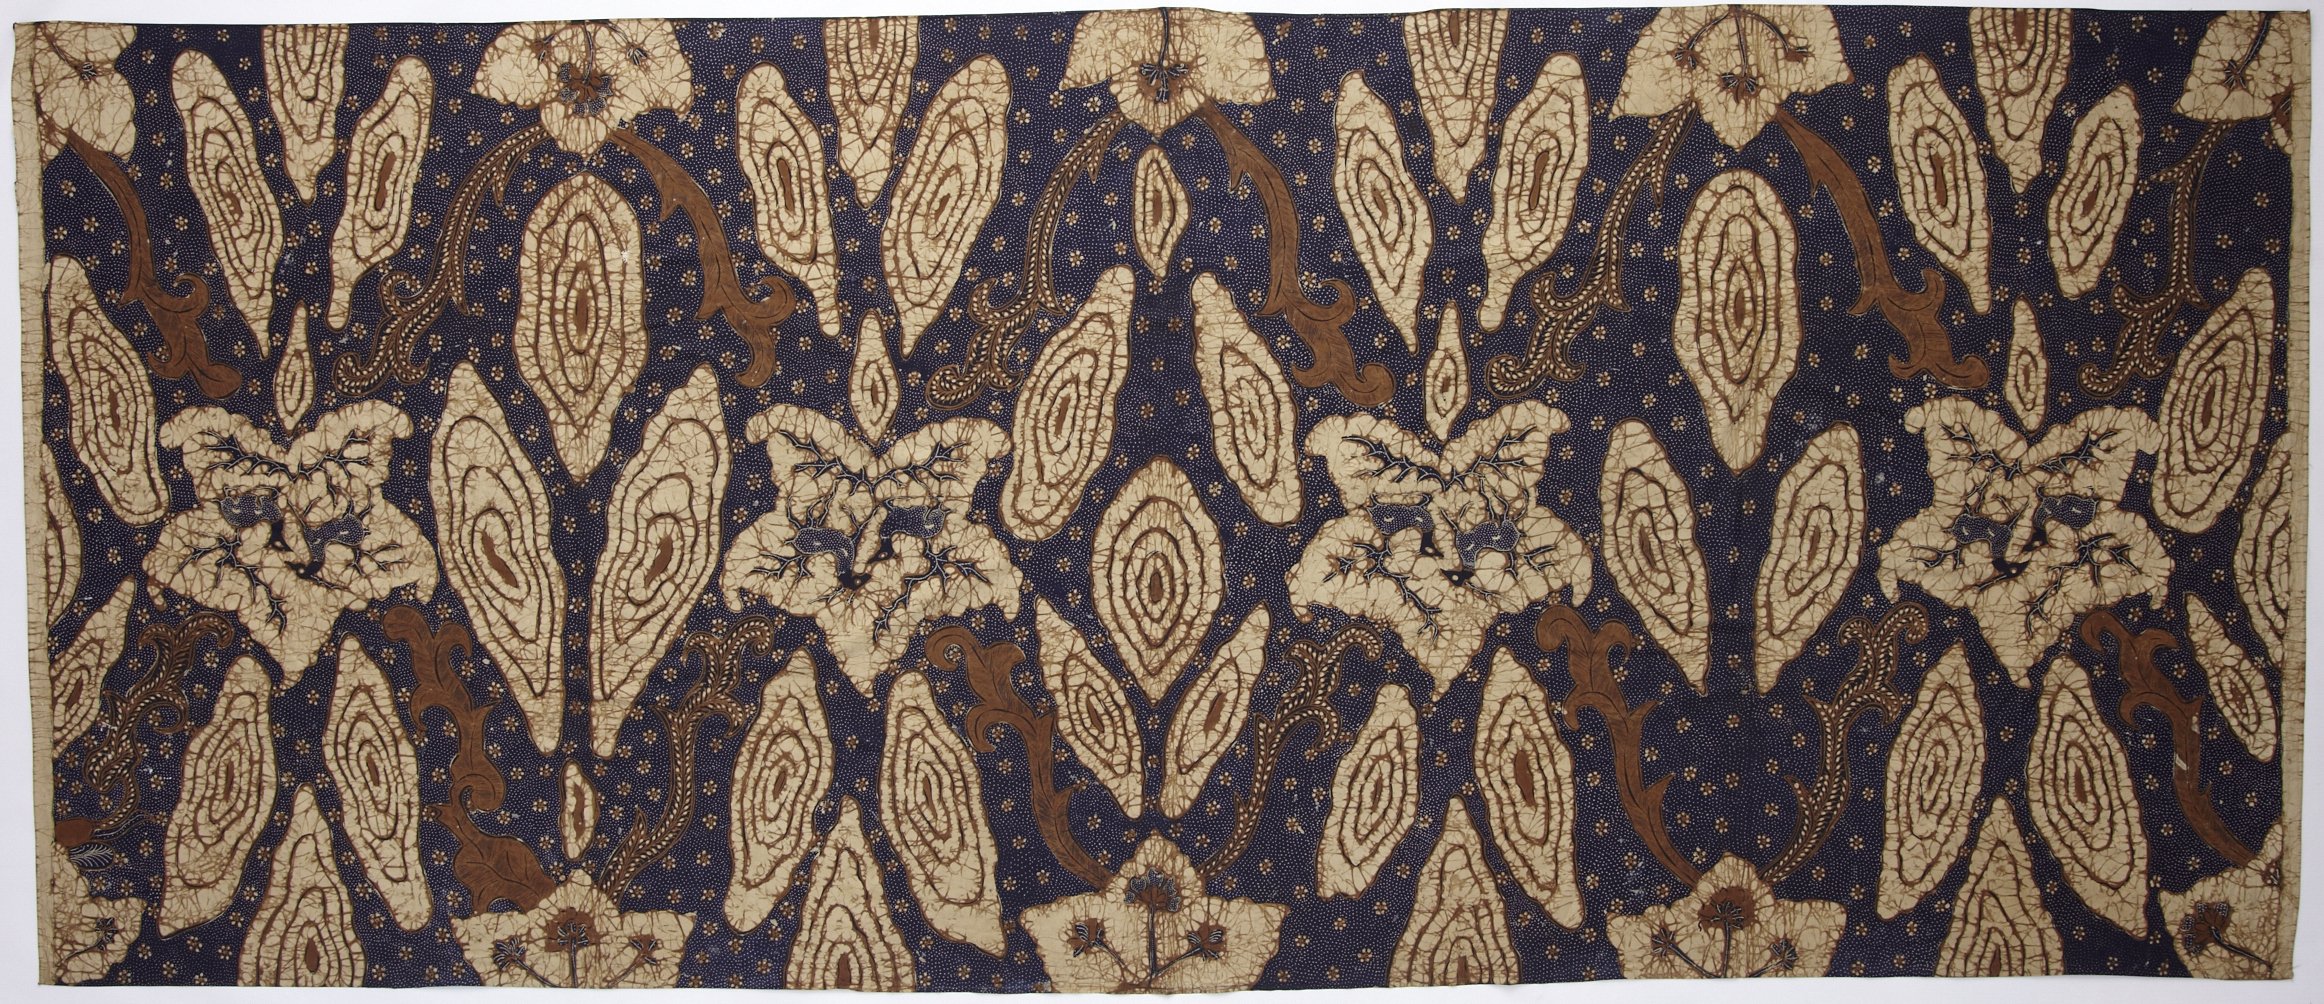 Indonesian Traditional Batik — Fabric Design, by Heri Supriyanto